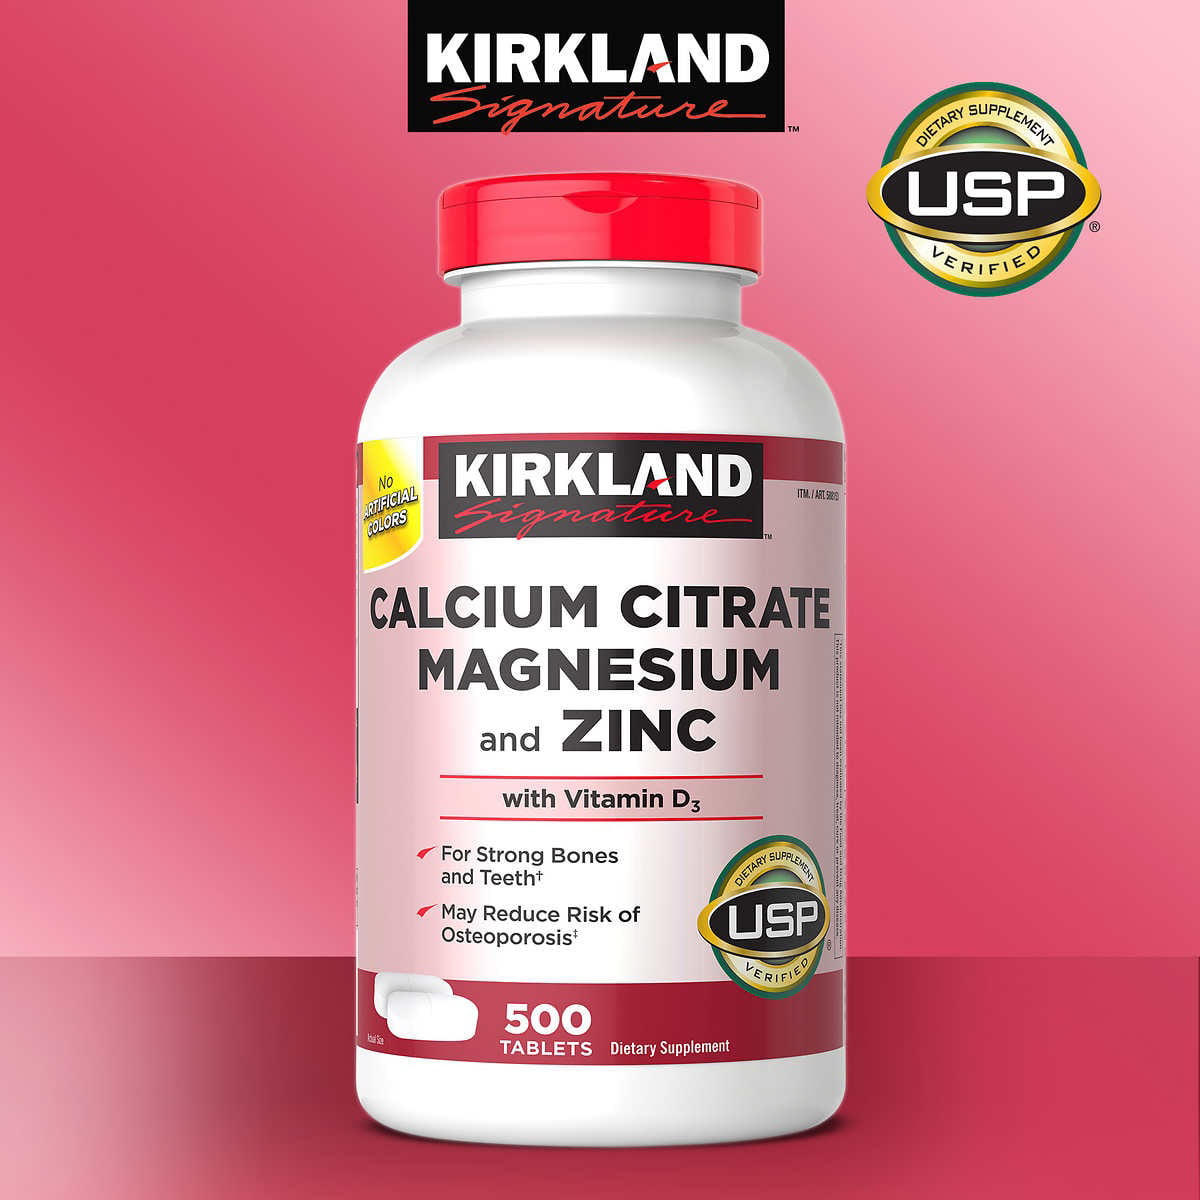 Kirkland Signature Calcium 600mg With Vitamin D3 500 Tablets Strong Bones 